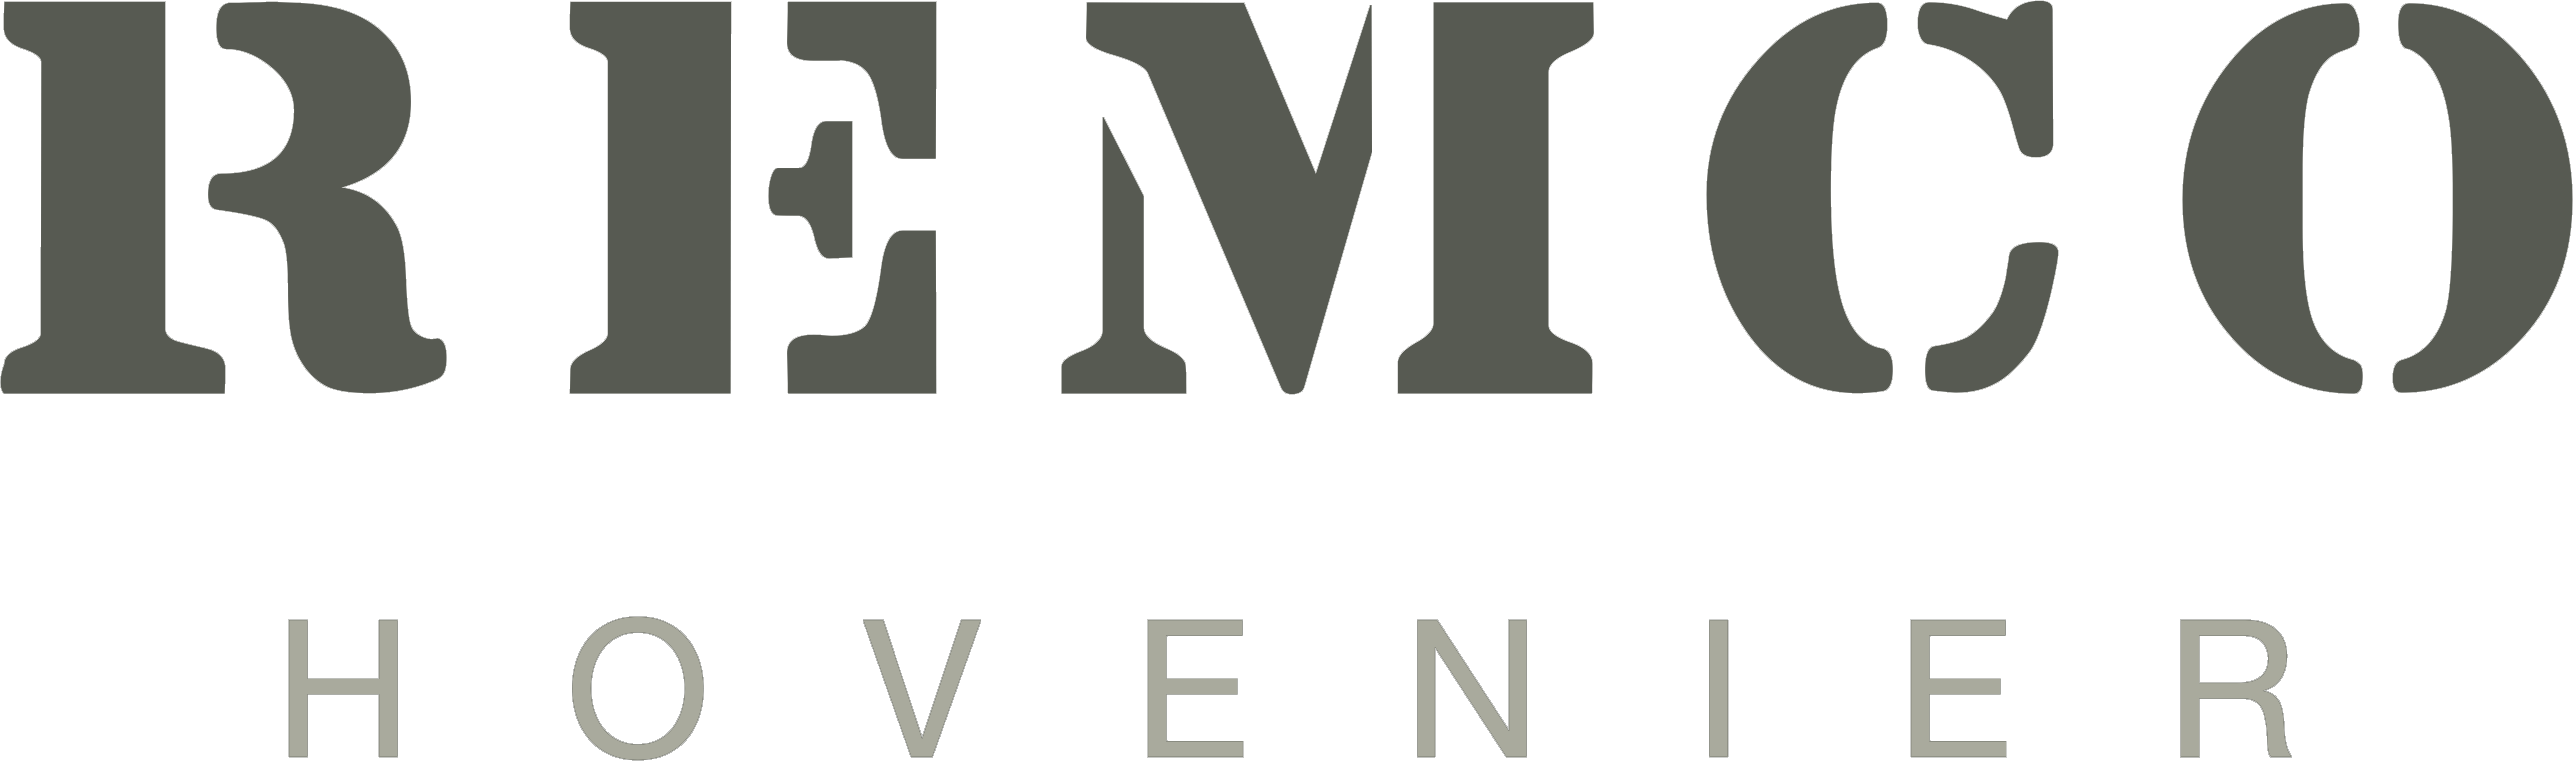 Remco Hofstee Hovenier Logo